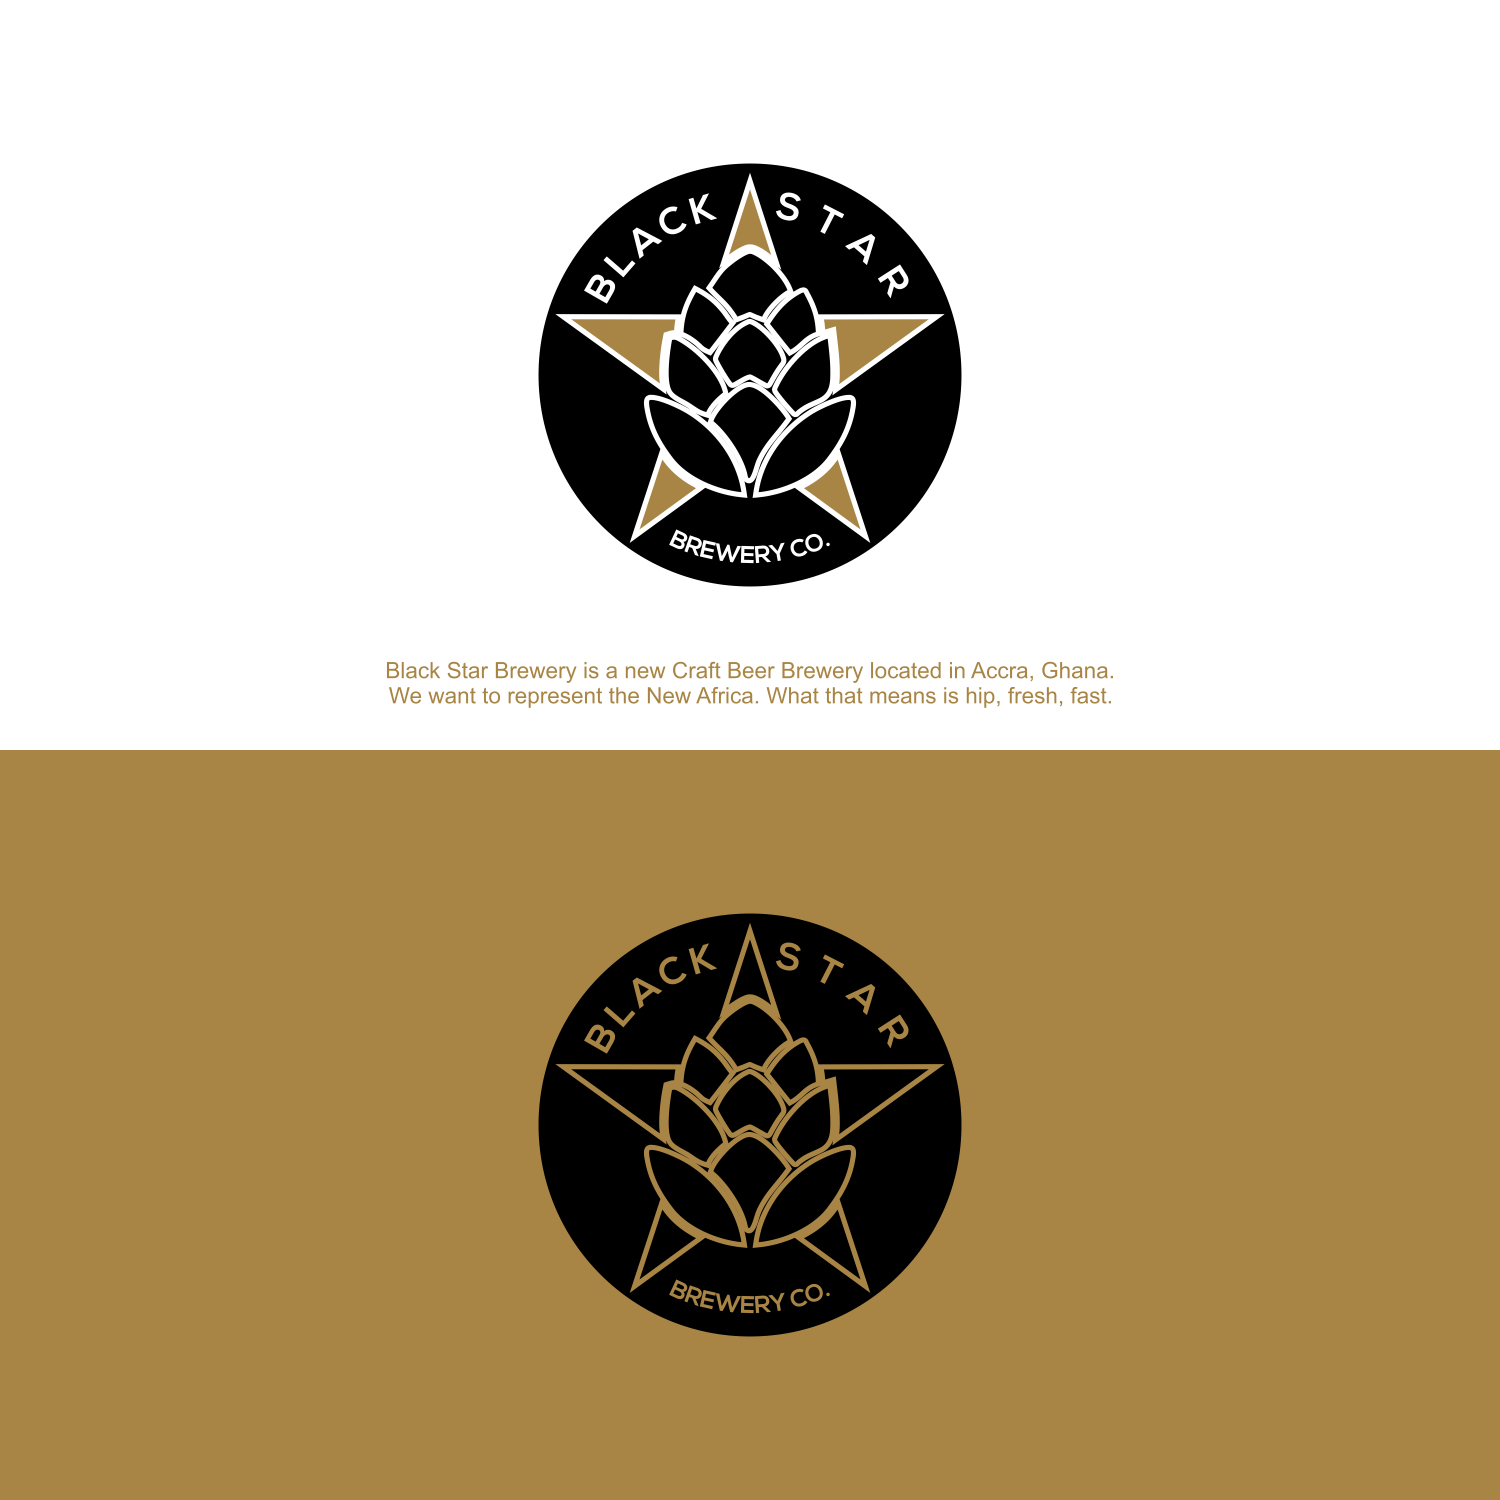 Black Star in Circle Company Logo - Logo Design for Black Star Brewery Co. by SARMONOX. Design